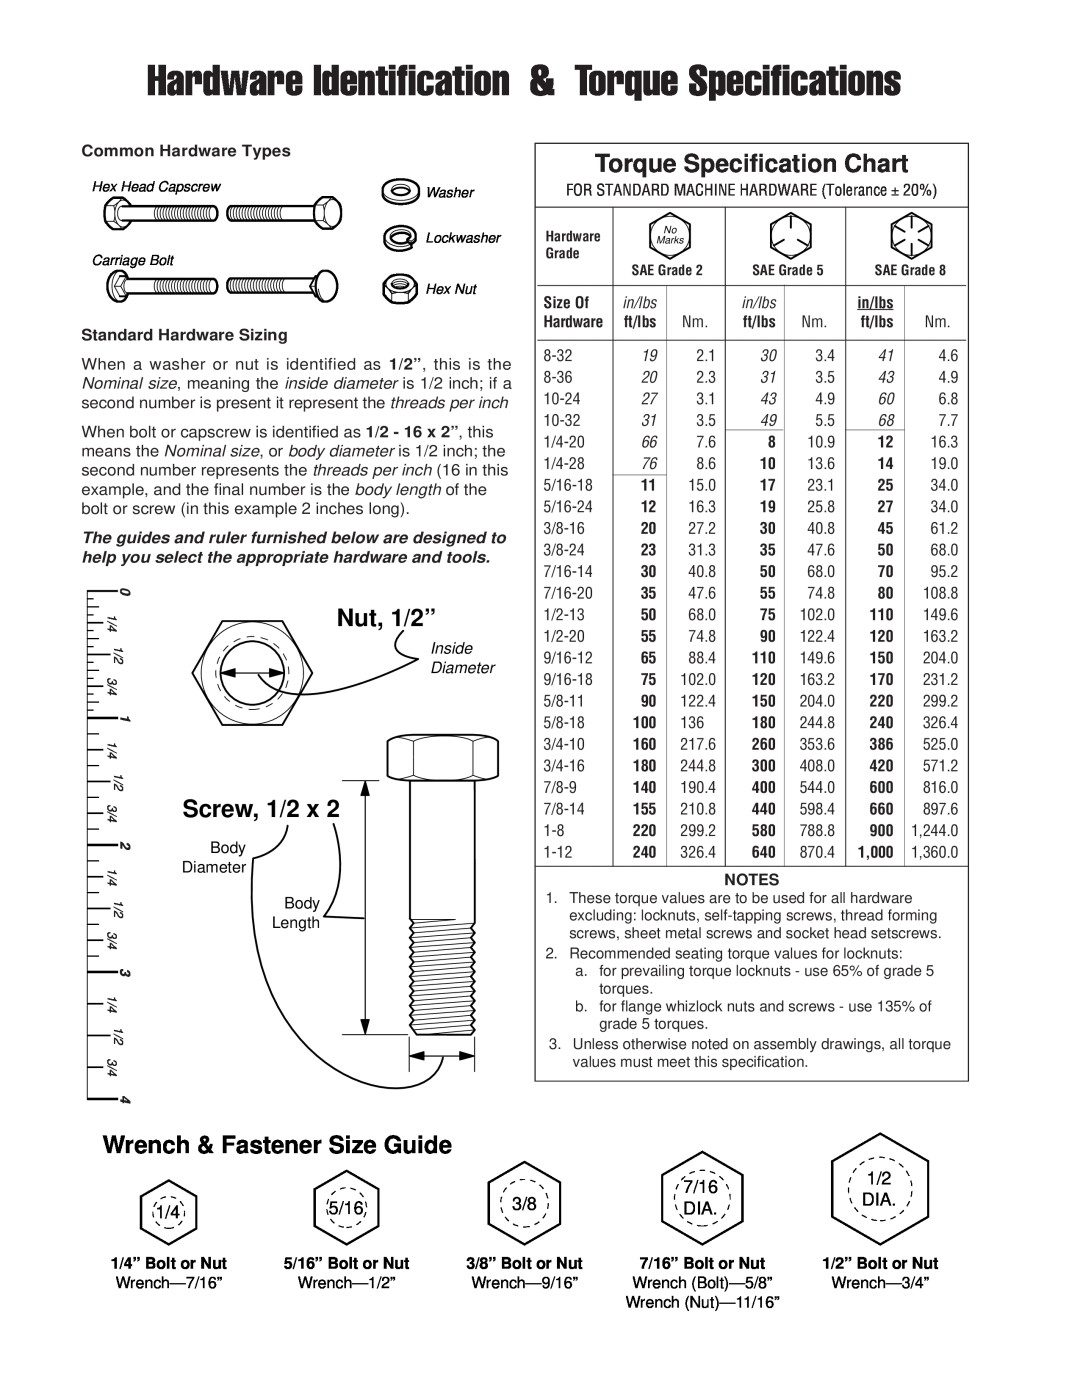 Simplicity 514RT Hardware Identification & Torque Specifications, Torque Specification Chart, Nut, 1/2”, Screw, 1/2 x 